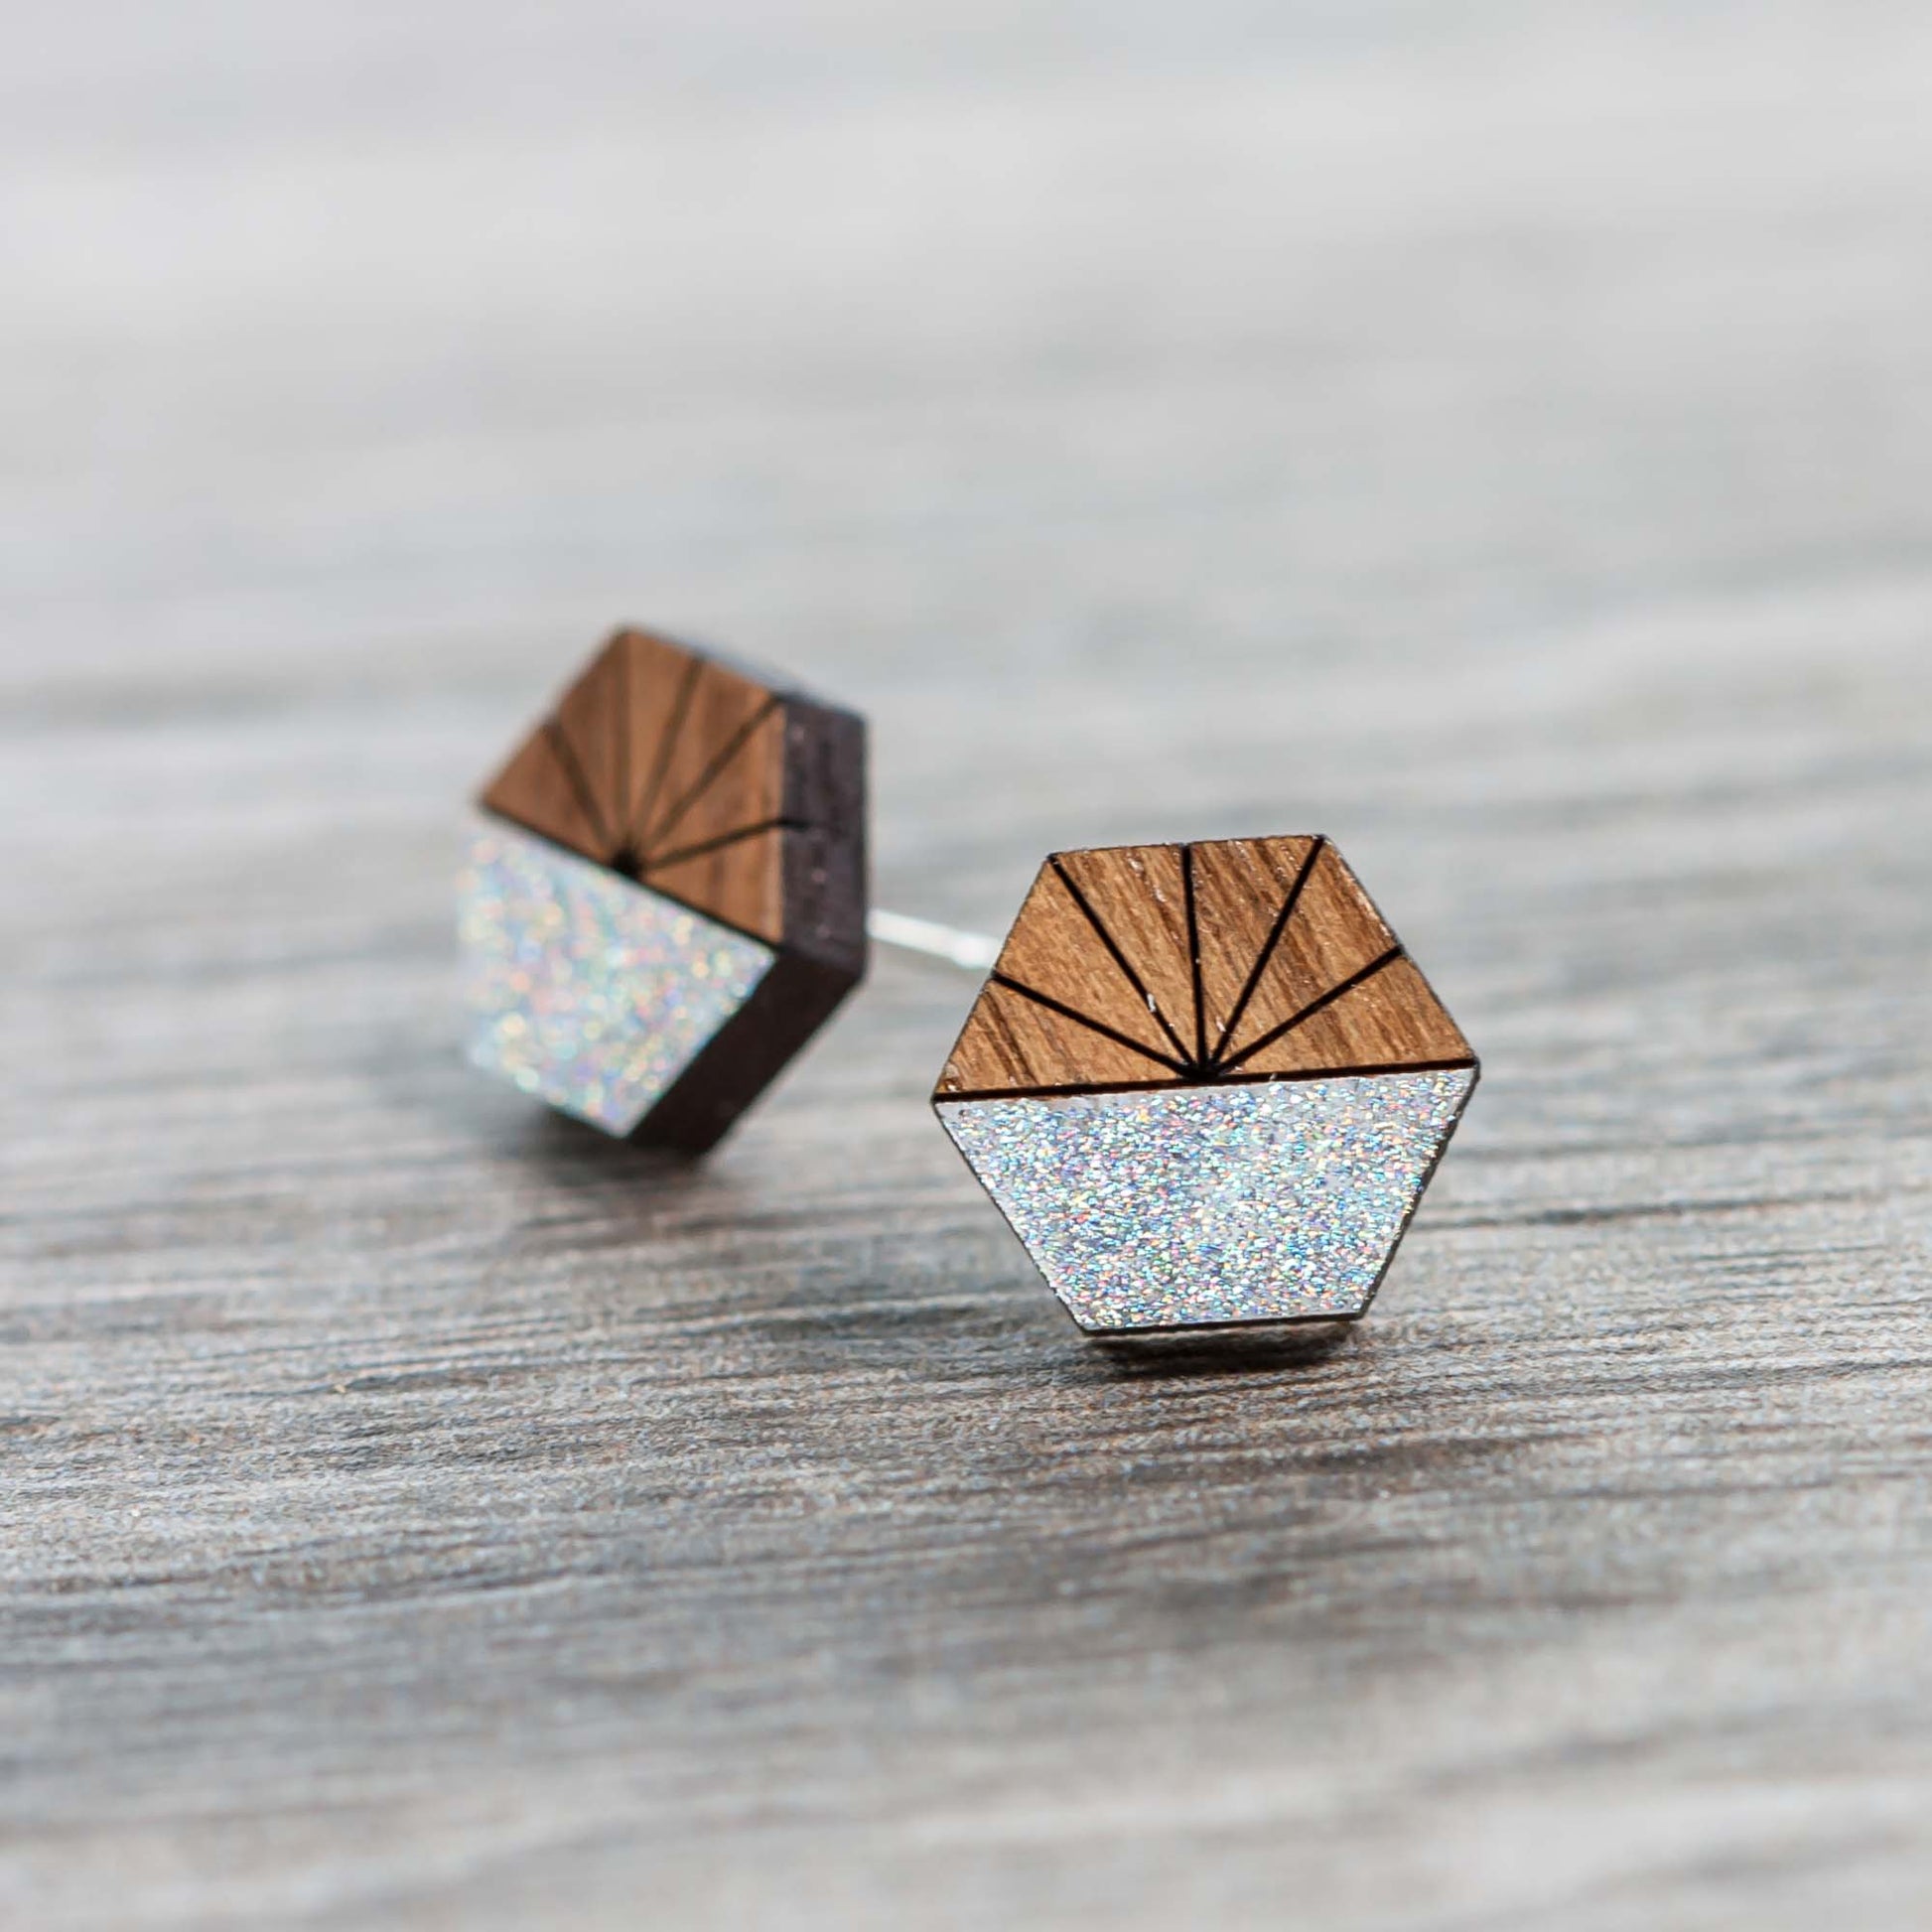 Wooden Laser Cut Earrings - Walnut with Silver Horizon Hexagon - by LeeMo Designs in Bend, Oregon